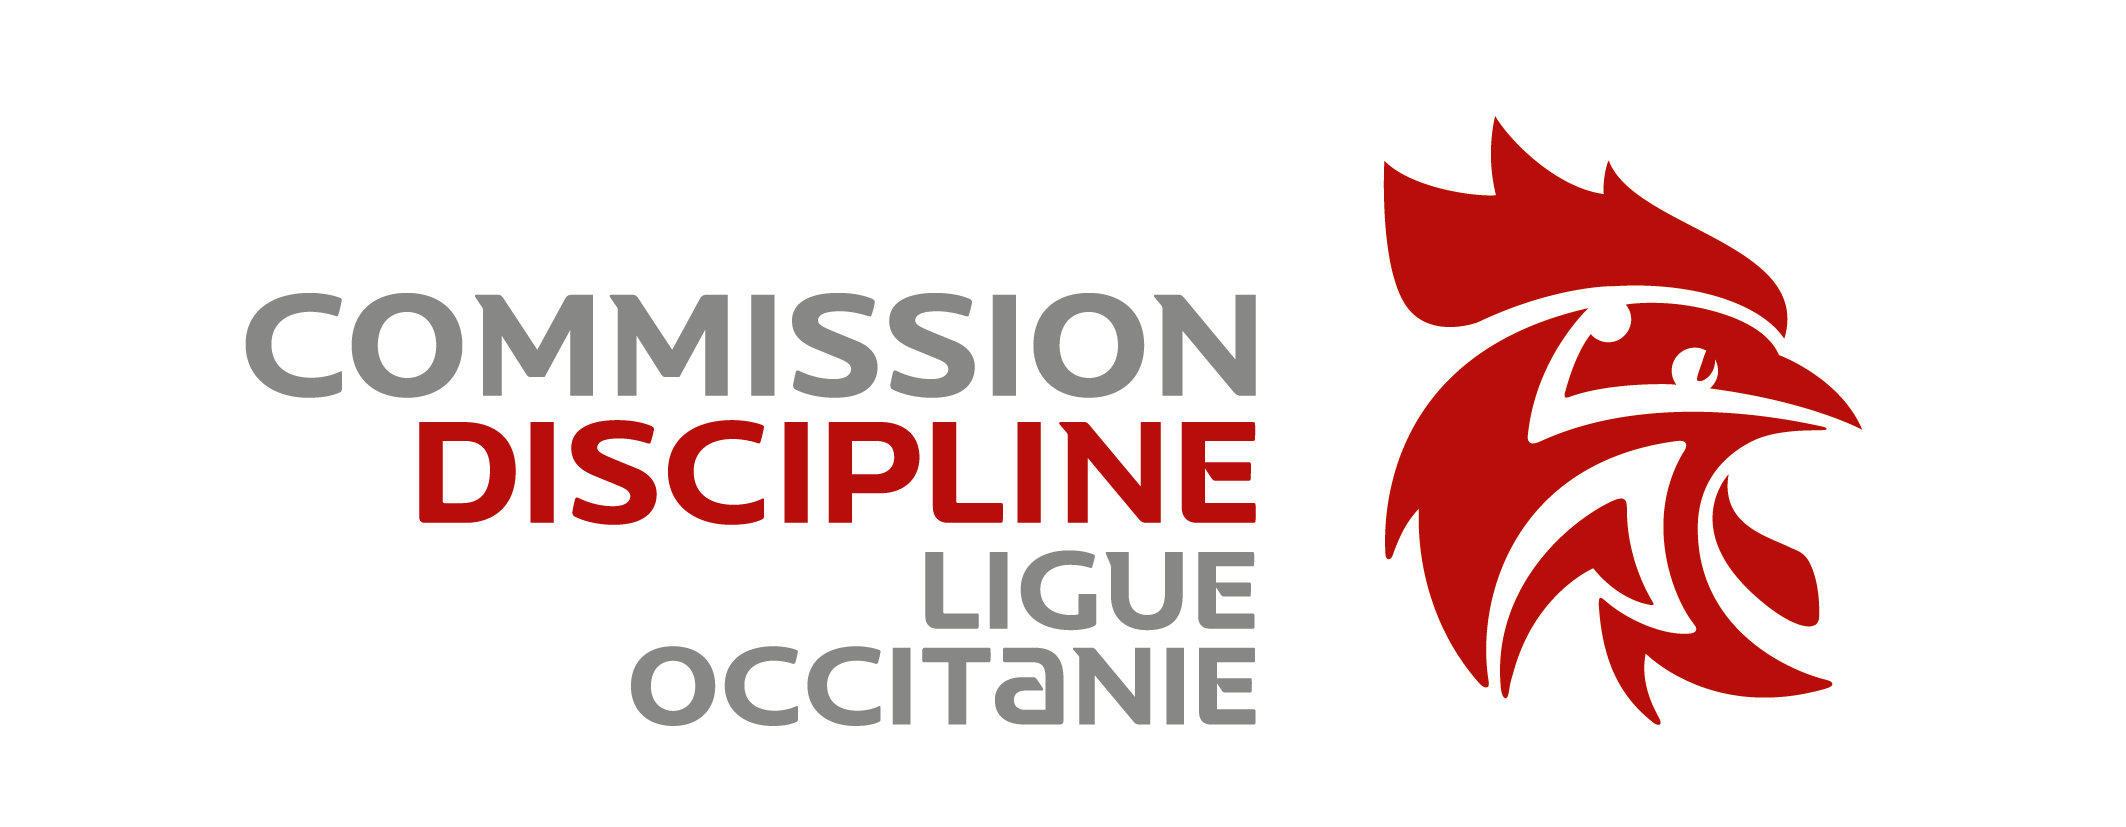 Commission Discipline